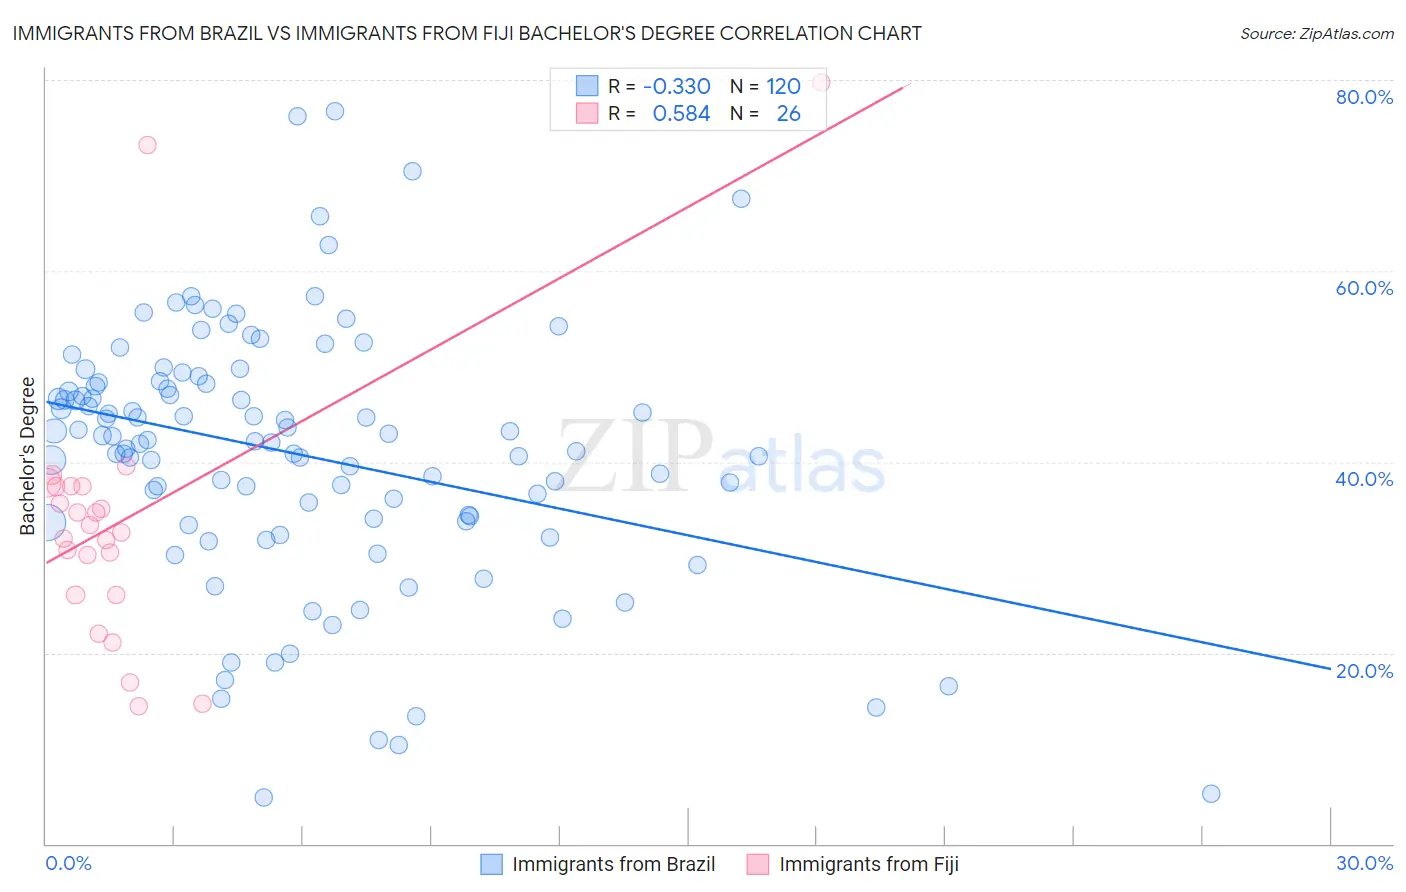 Immigrants from Brazil vs Immigrants from Fiji Bachelor's Degree